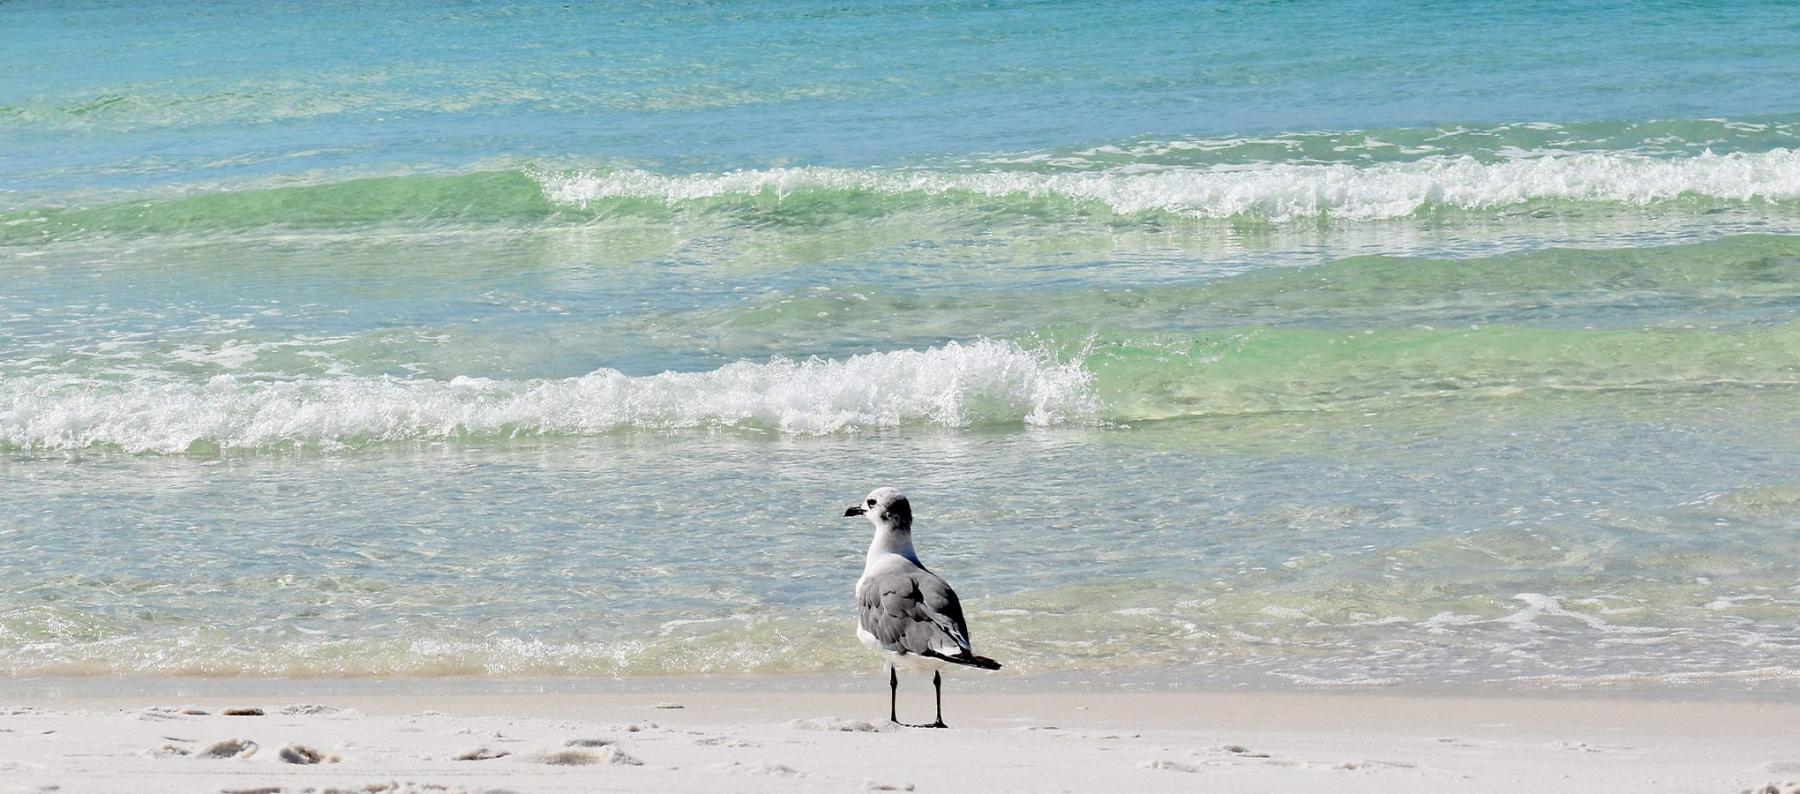 Seaside, Florida beach